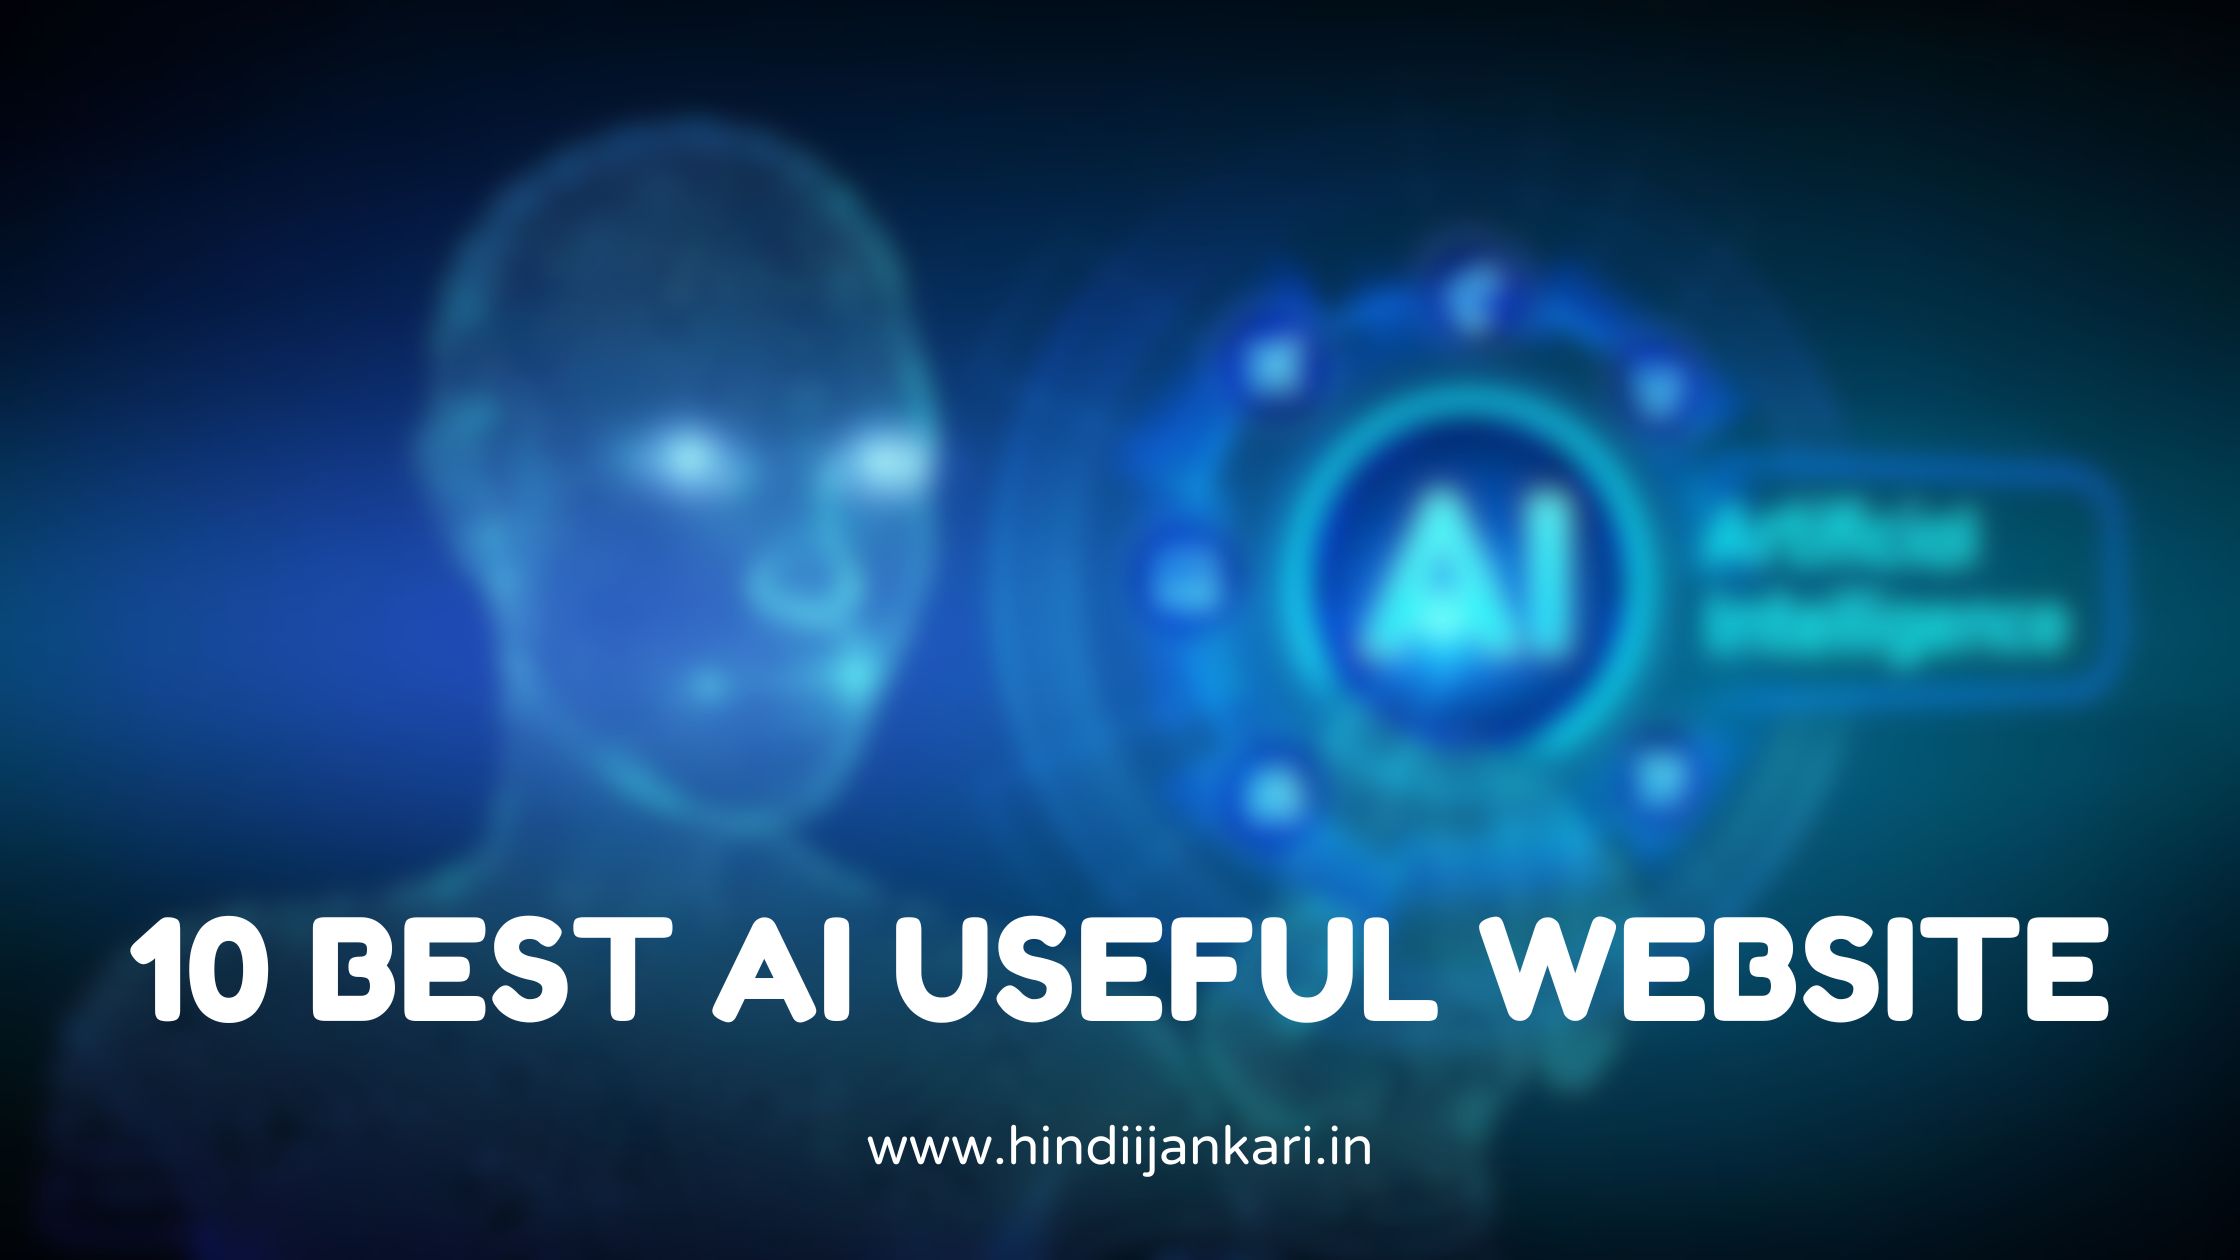 10 Best AI Useful Website in Hindi